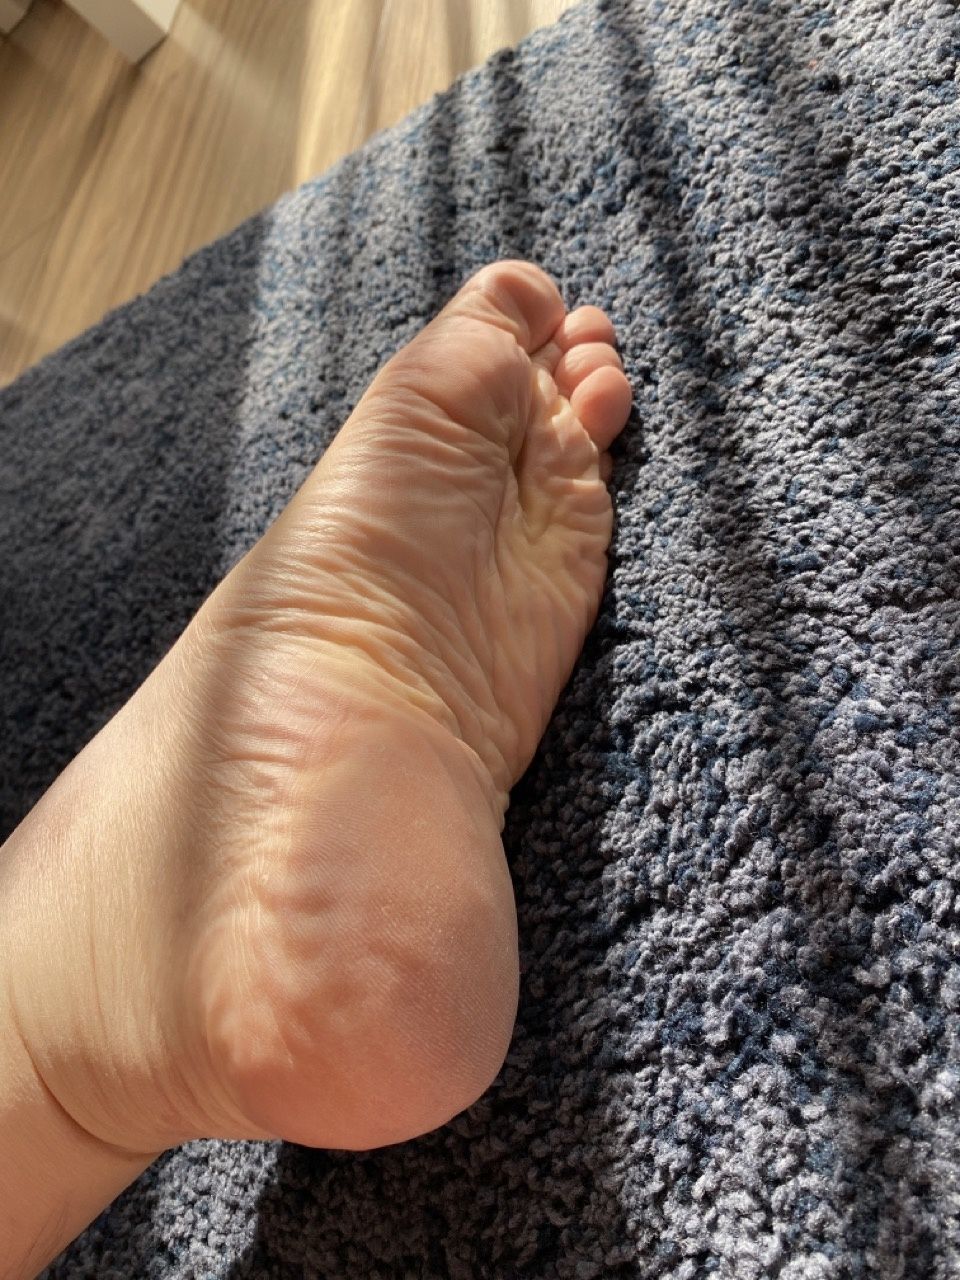 My beautiful male soles #5